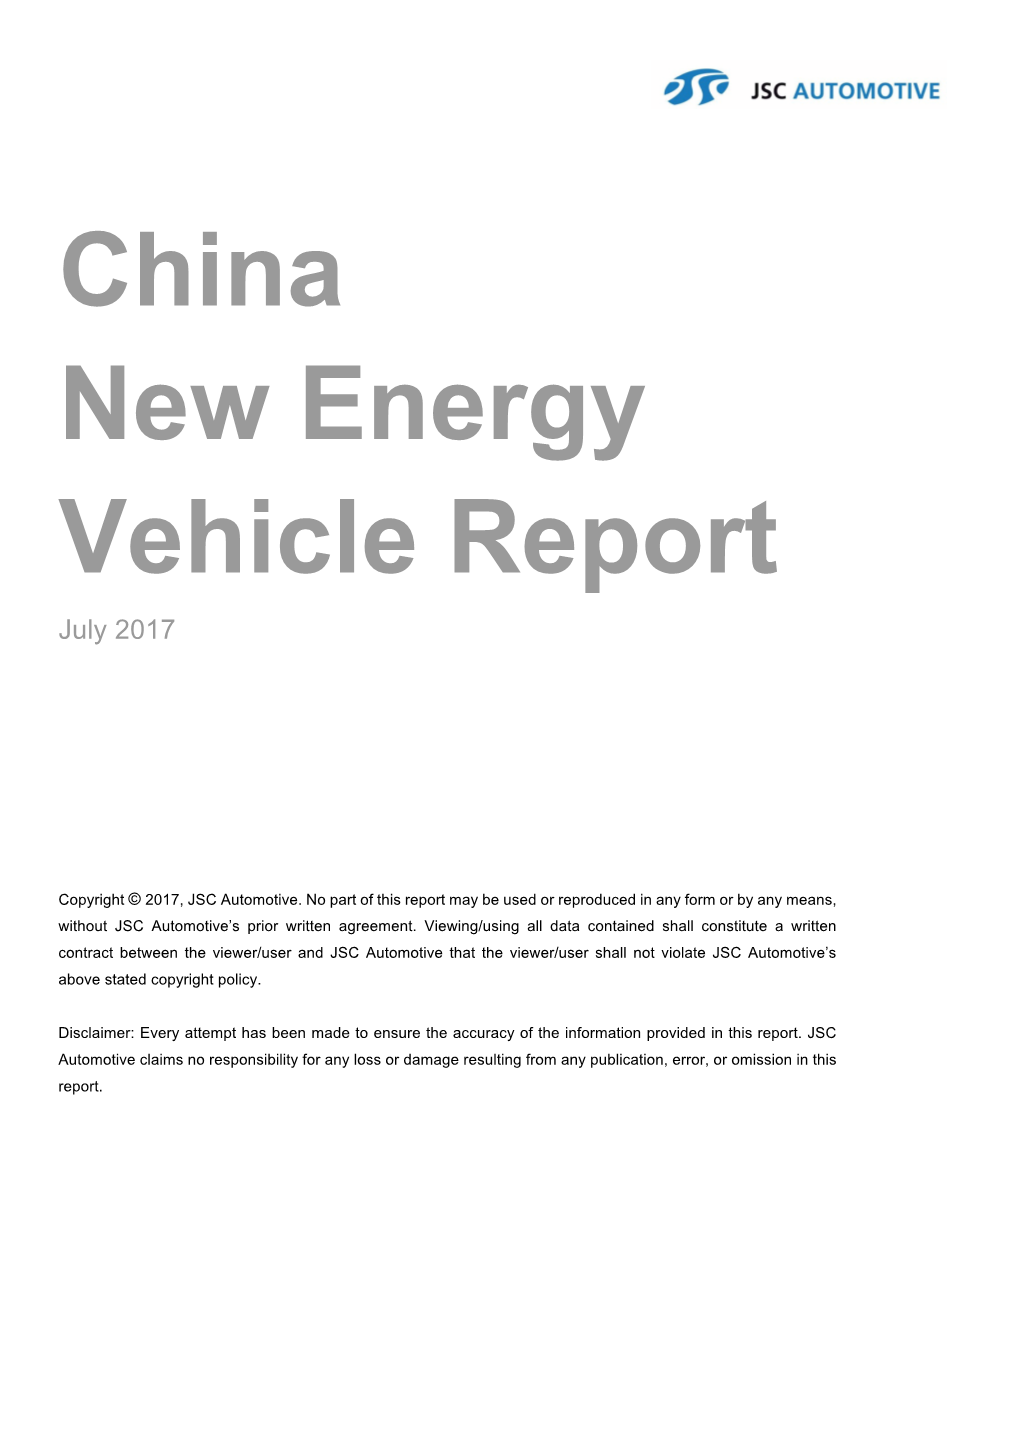 China New Energy Vehicle Report July 2017